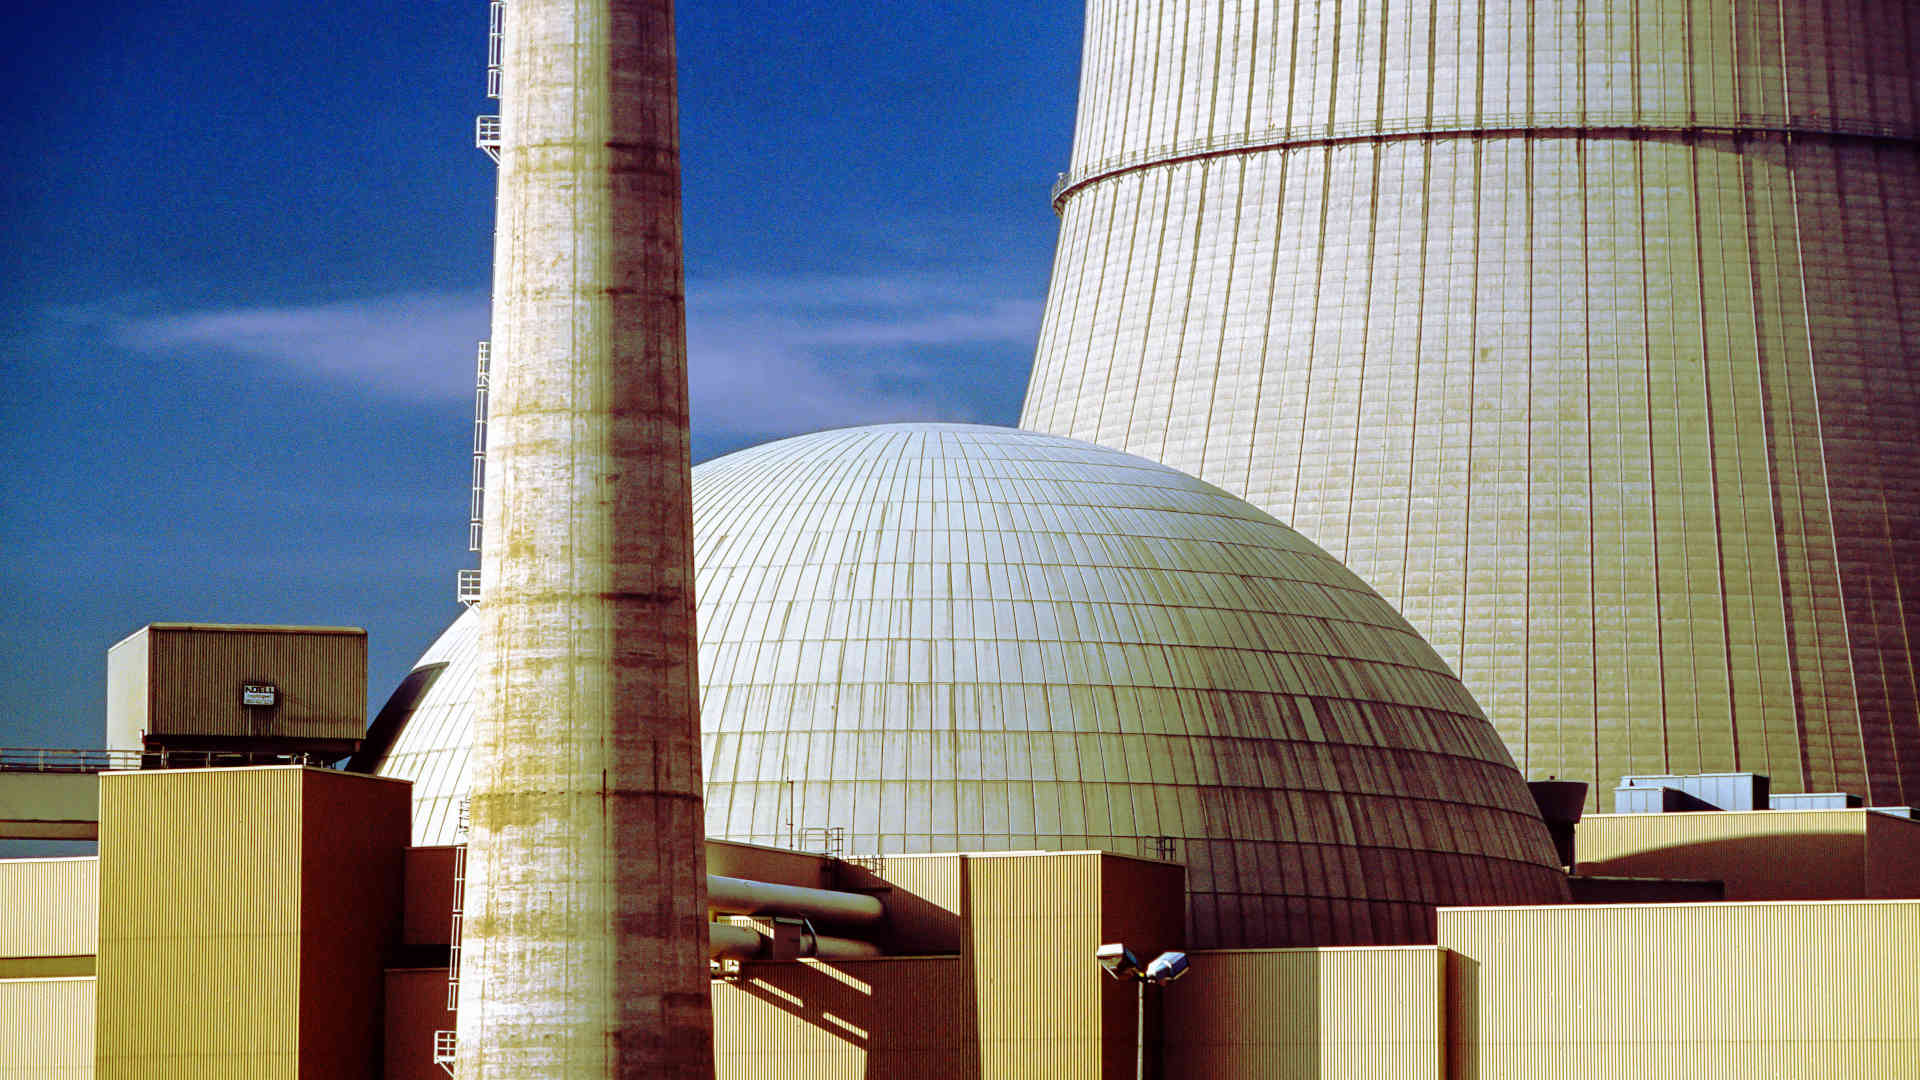 Symbolbild: Kernkraftwerk Emsland, Druckwasserreaktor, Betreibergesellschaft: Kernkraftwerke Lippe-Ems GmbH. (Foto: Rupert Oberhäuser/picture alliance)